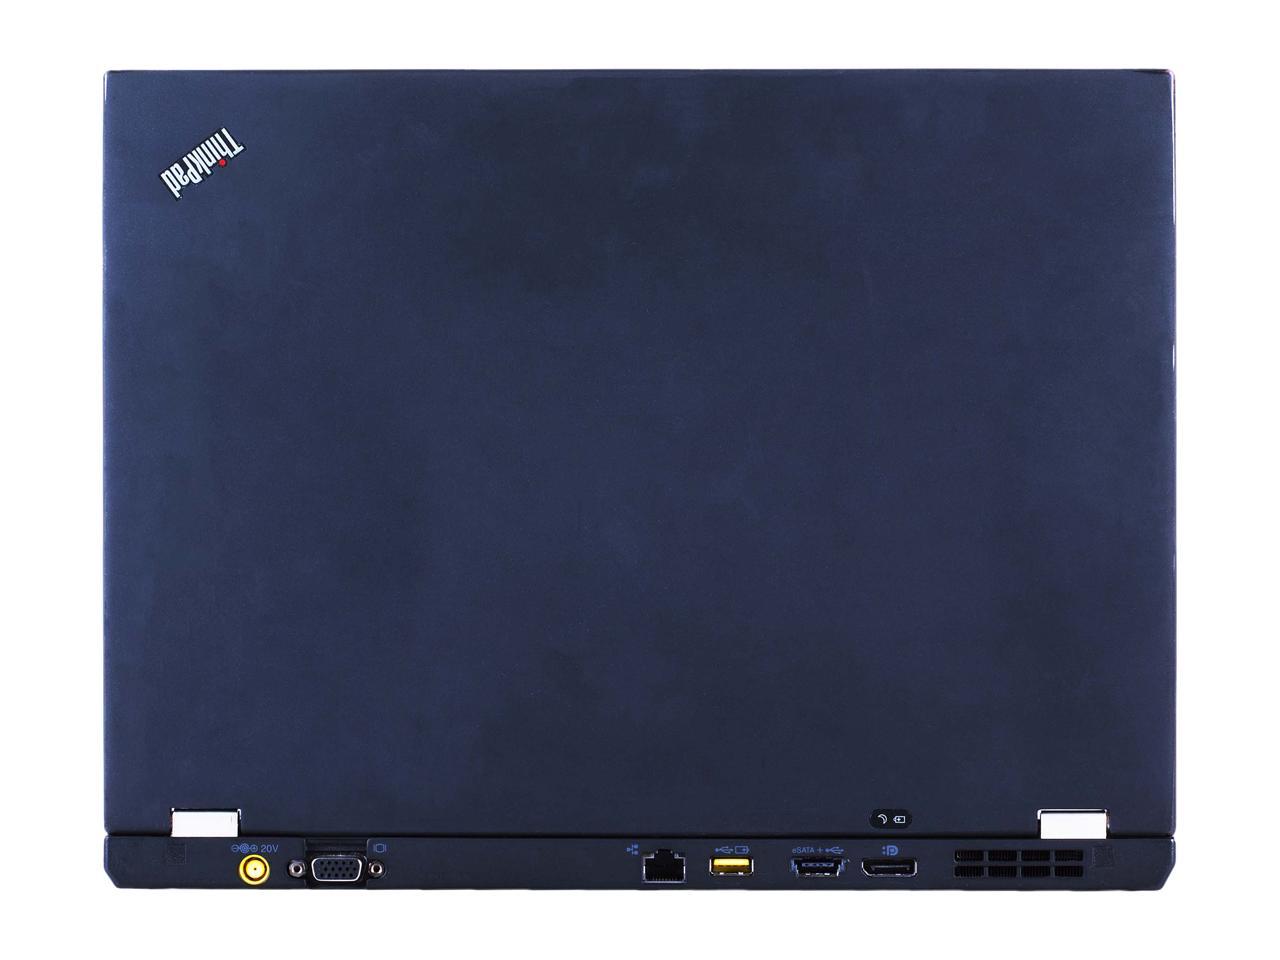 Lenovo Grade A Laptop ThinkPad T410S Intel Core i5 1st Gen 520M (2.40 GHz) 4 GB Memory 120 GB SSD Integrated Graphics 14.1" Windows 7 Professional 64-Bit